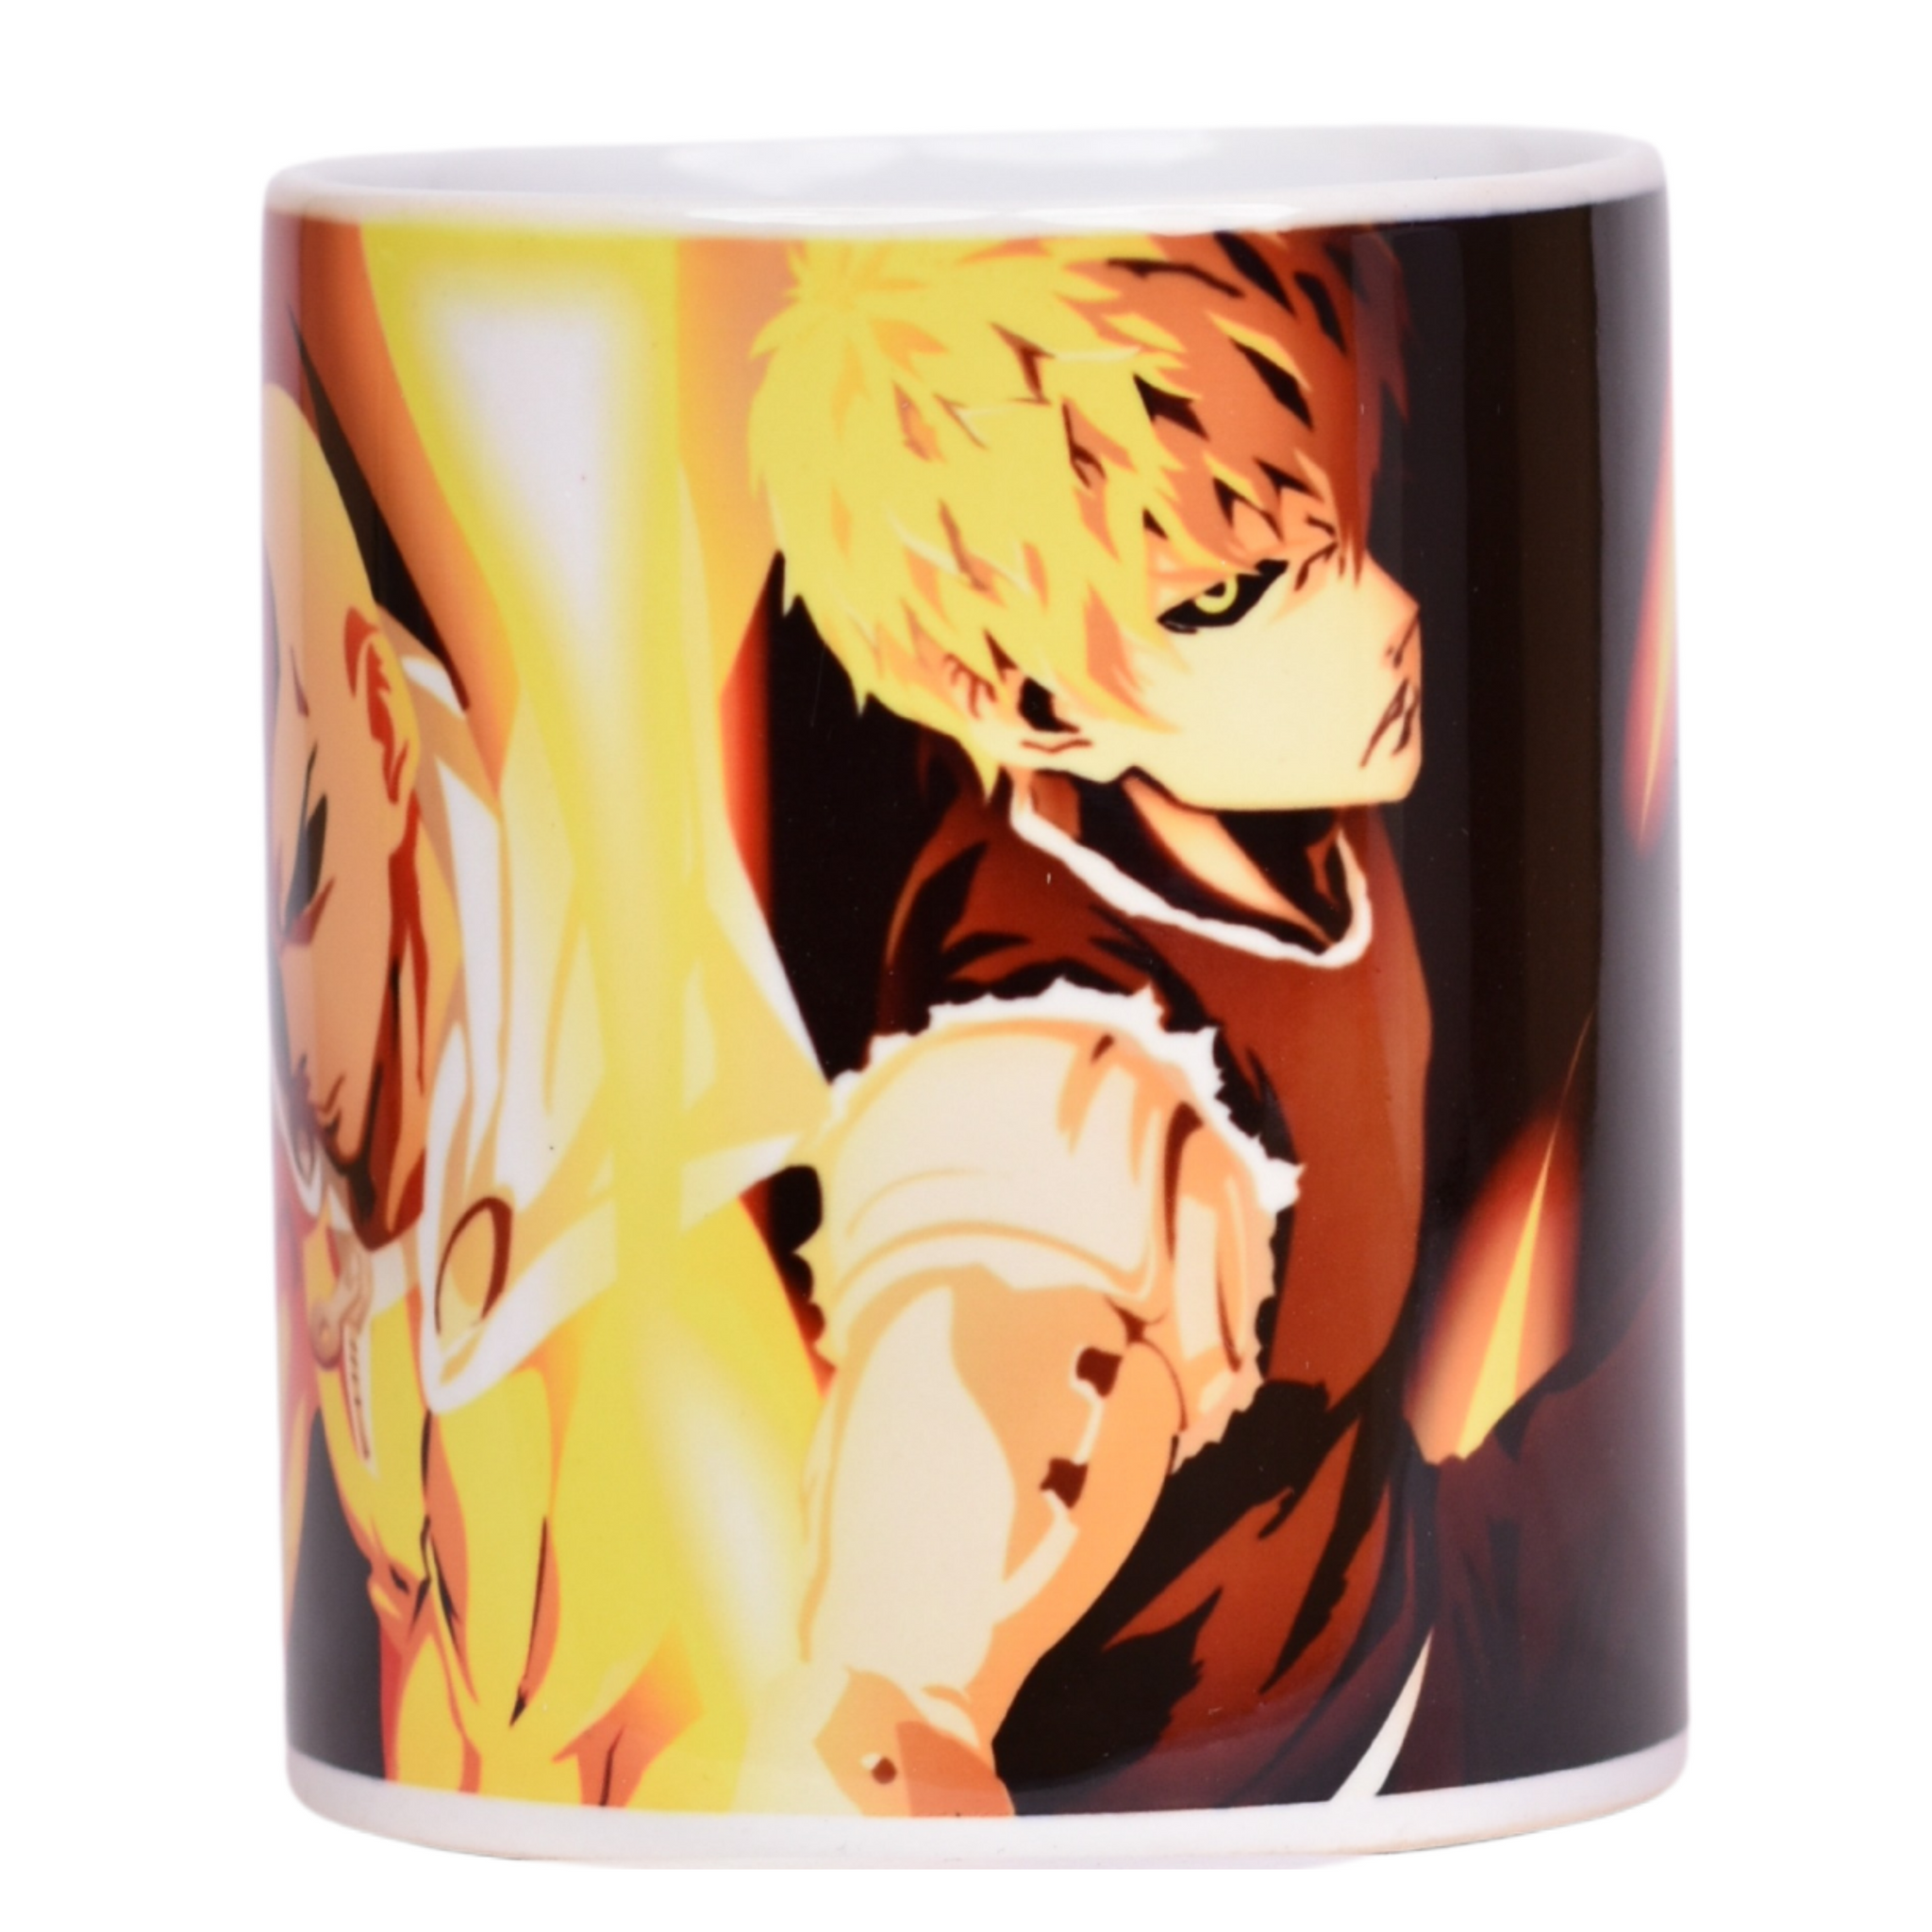 Anime: One Punch Man - White Ceramic Mug